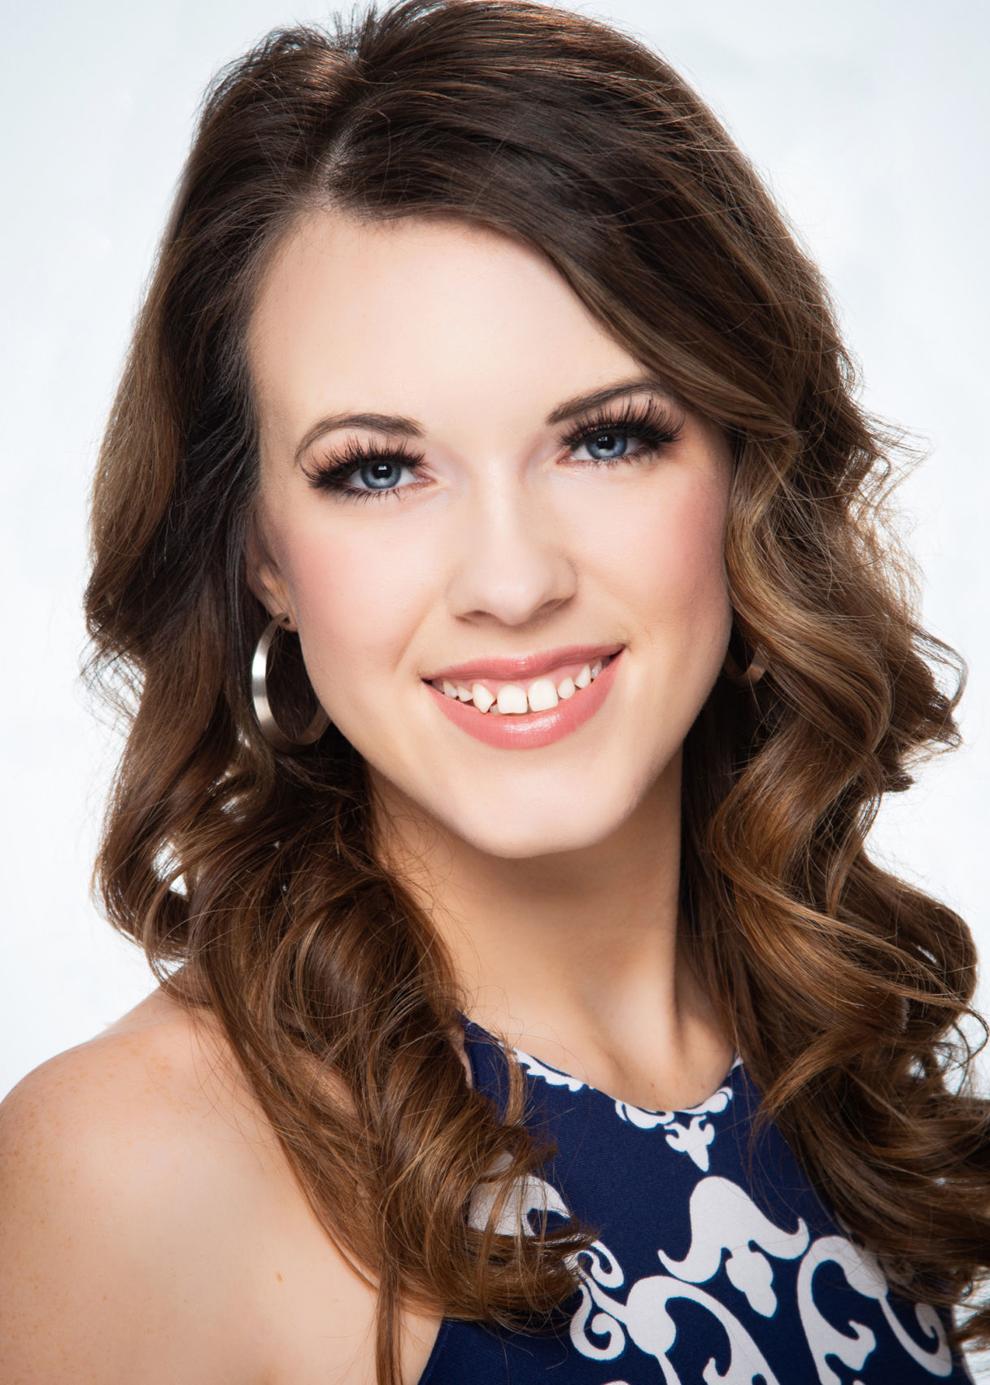 Gallery: 2019 Miss Oklahoma contestants